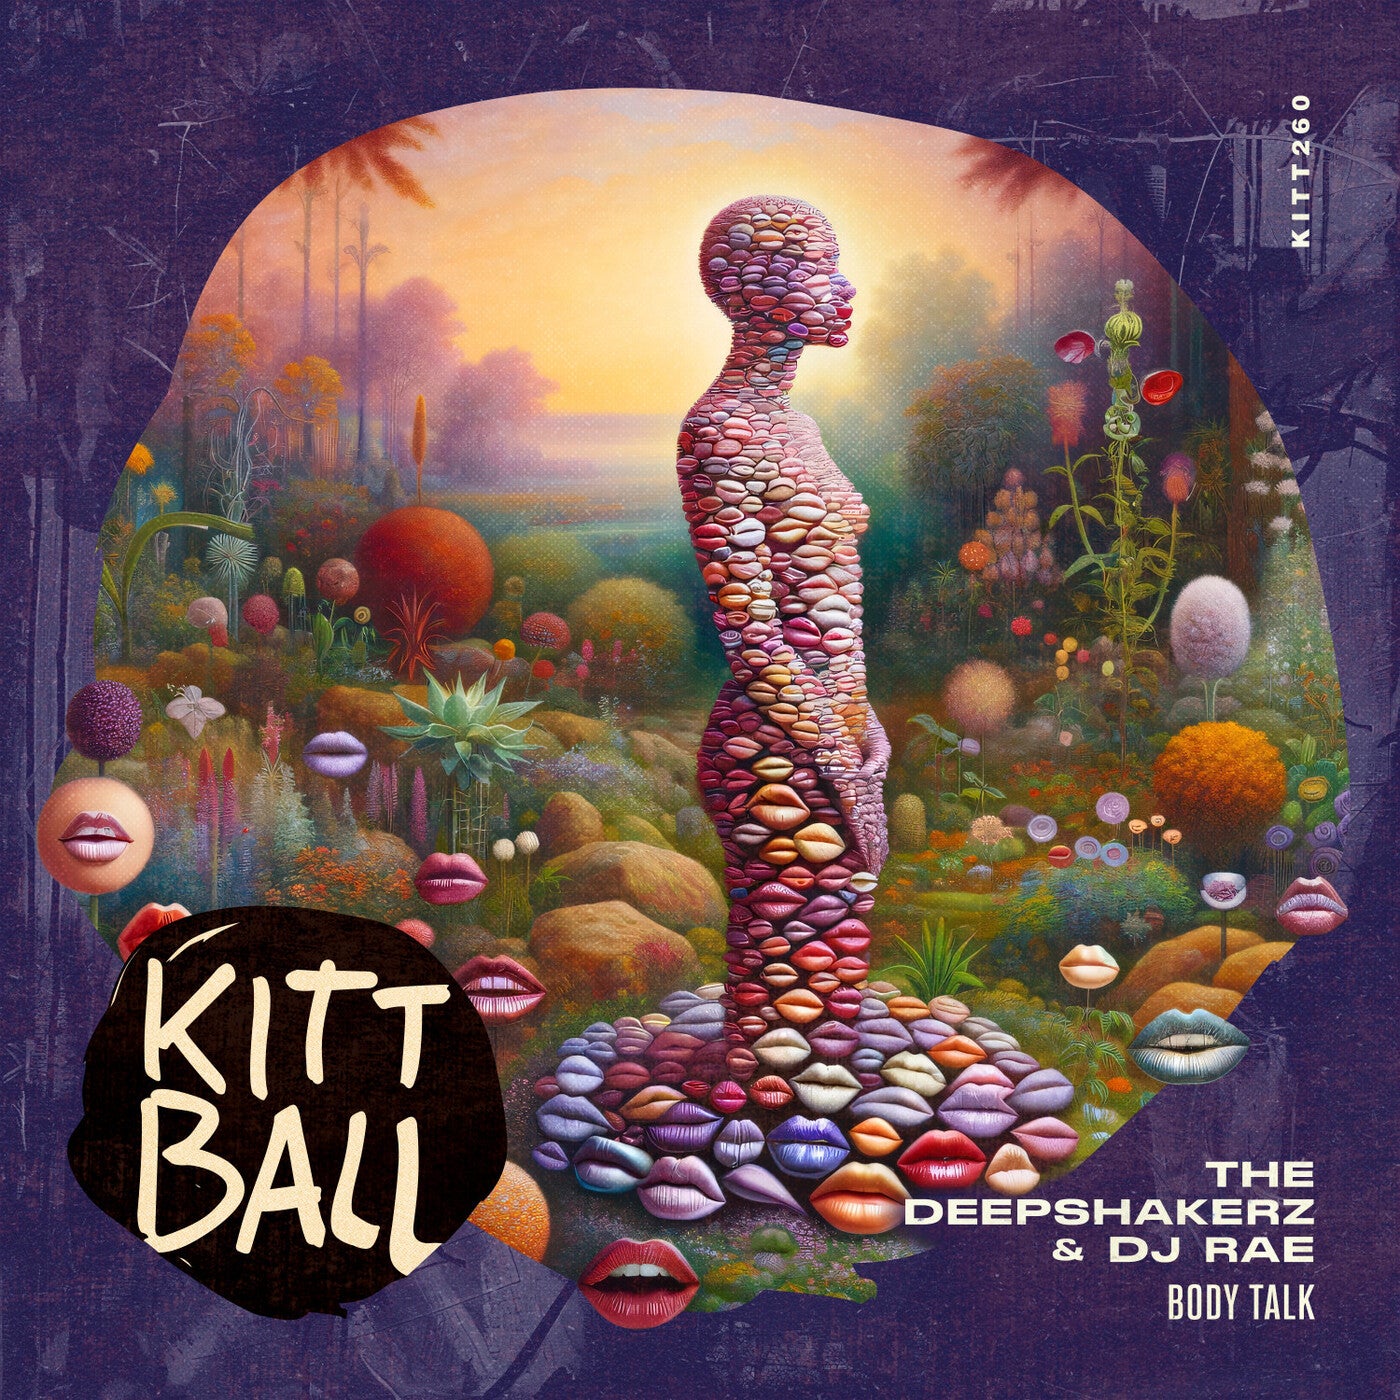 image cover: The Deepshakerz, DJ Rae - Body Talk on Kittball